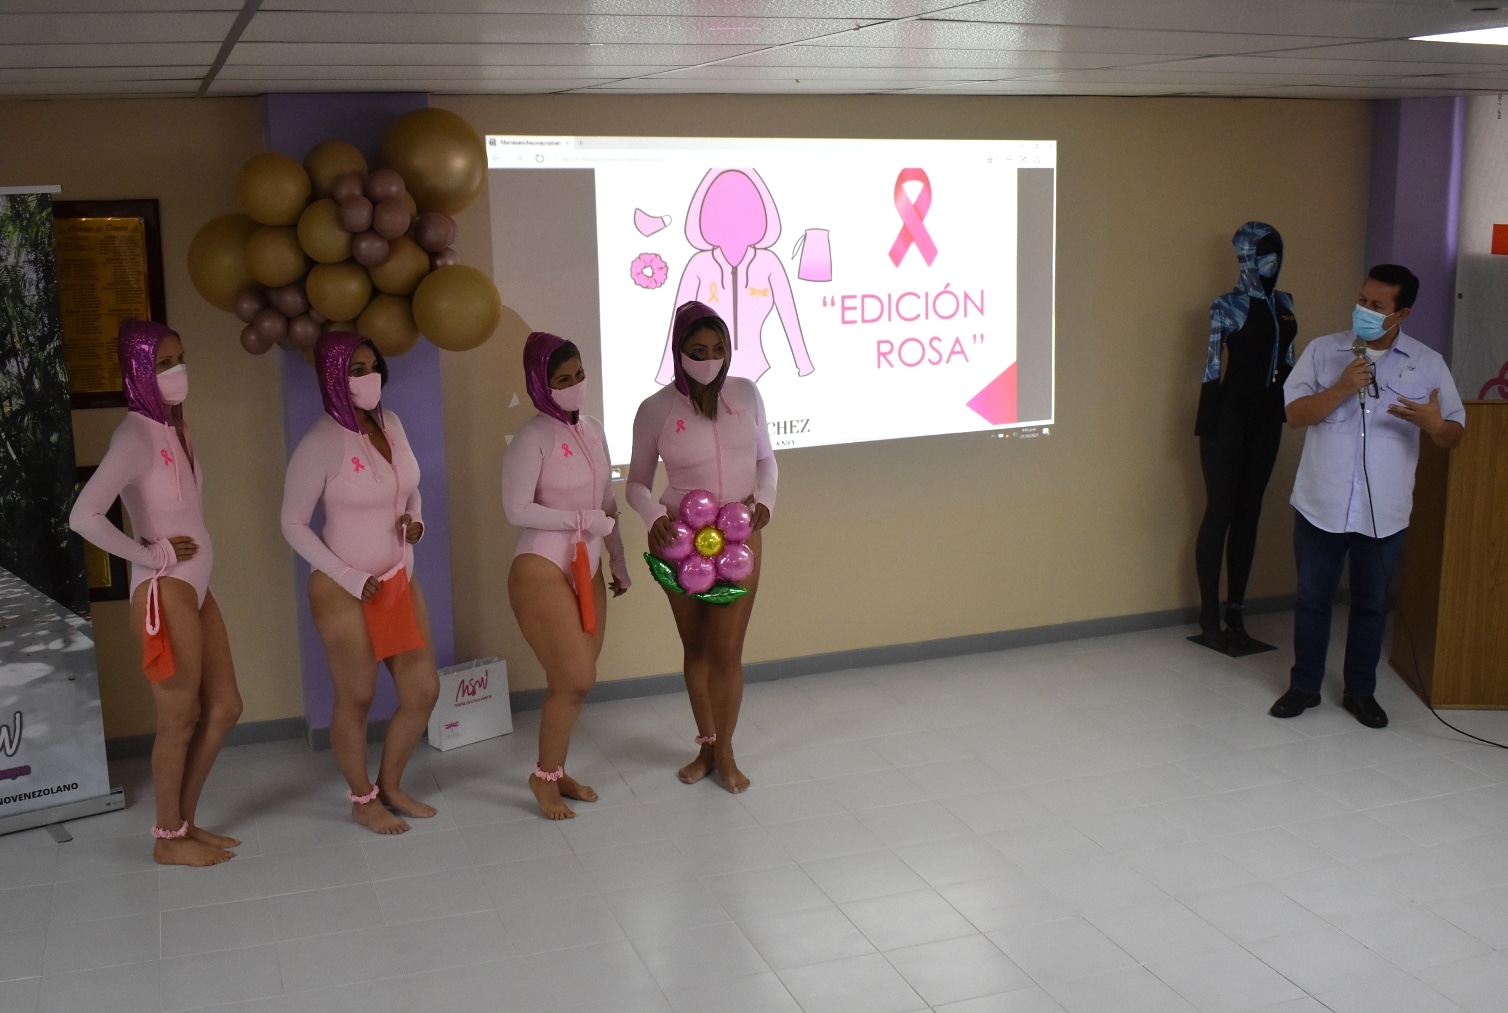 Bañadores rosa a la lucha contra el cáncer